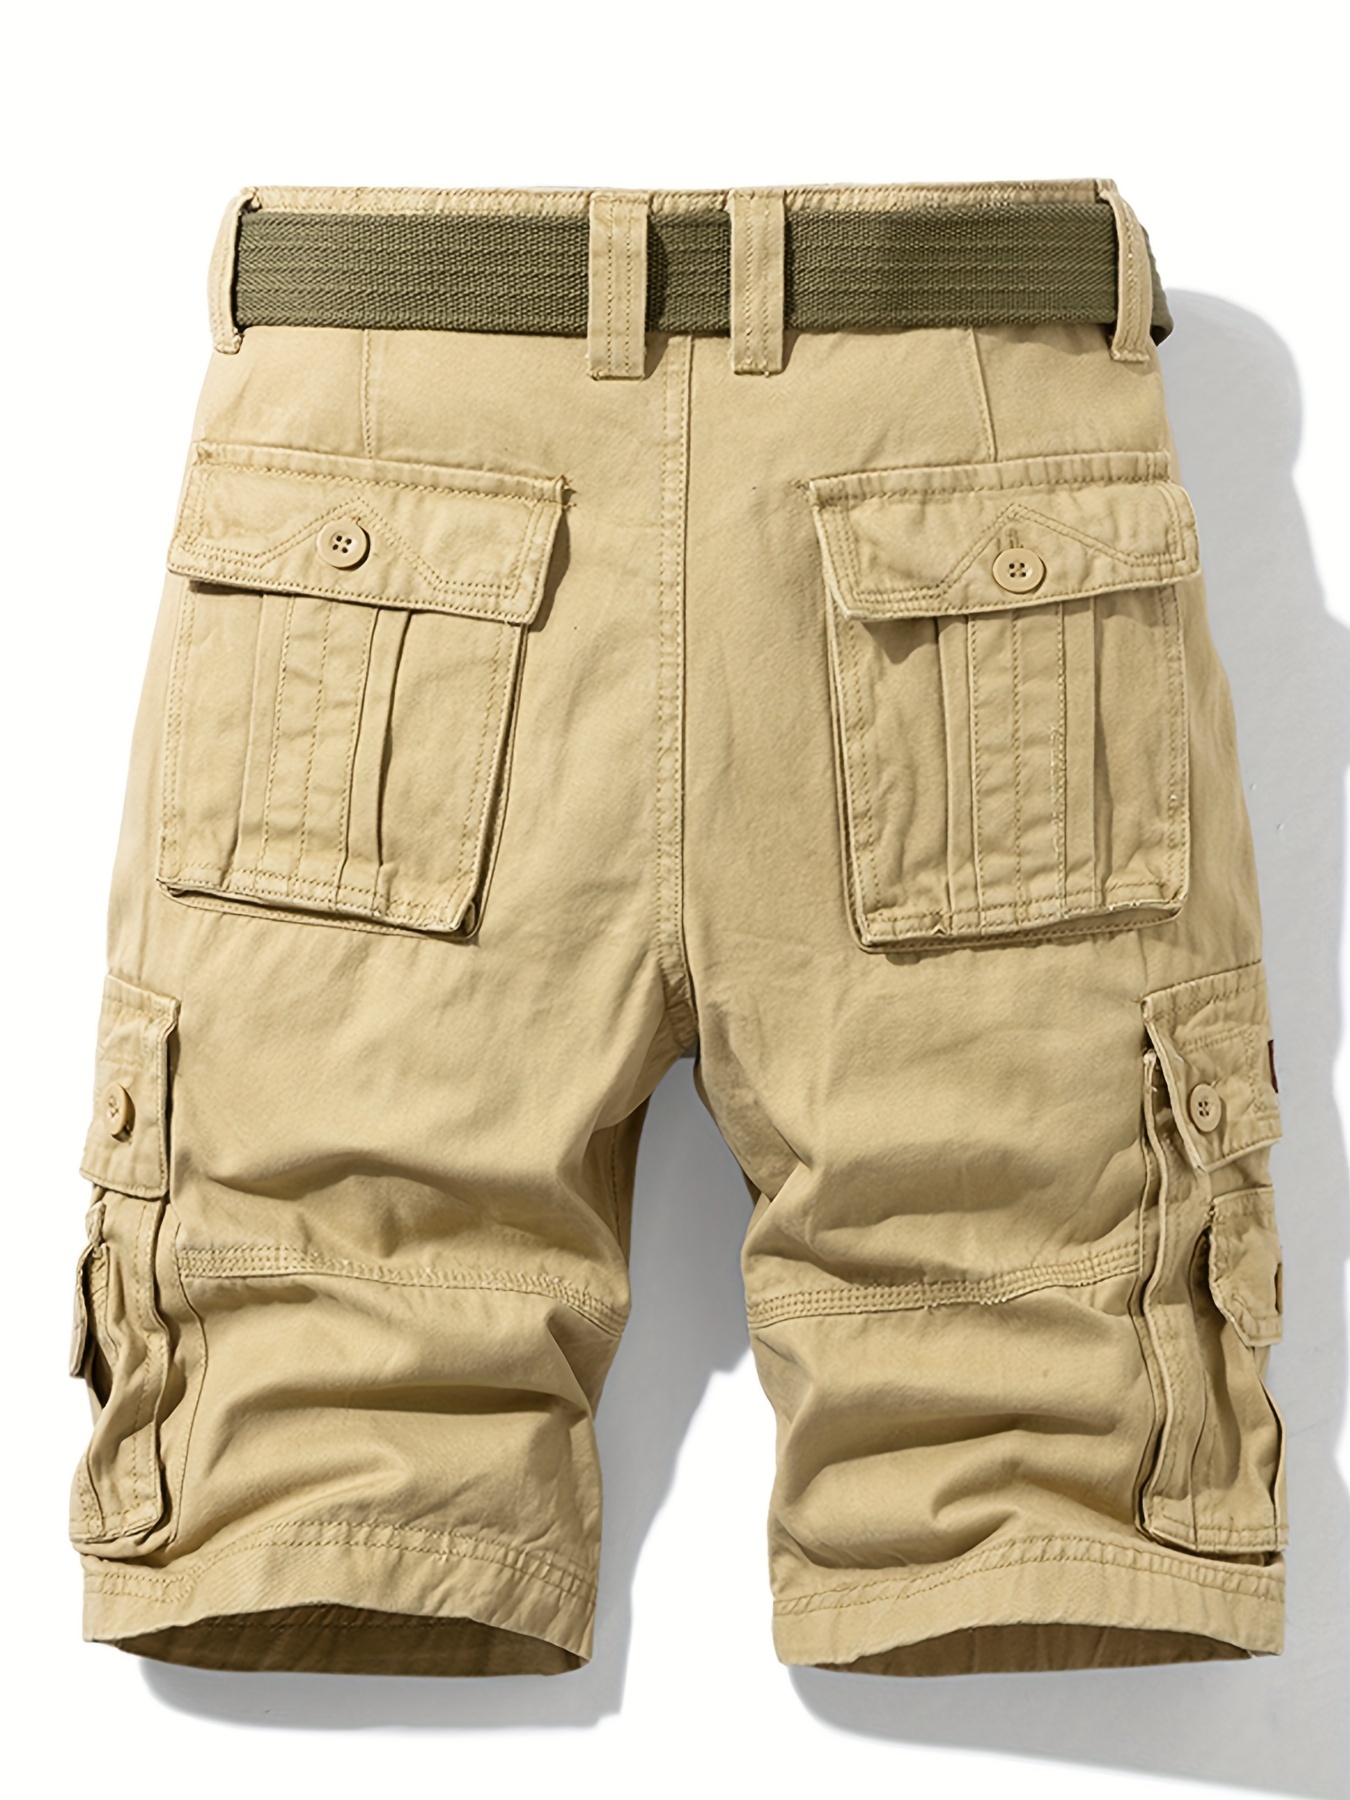 ON SALE!! Men's Casual Fashion Chino Cargo Shorts Pants Multi